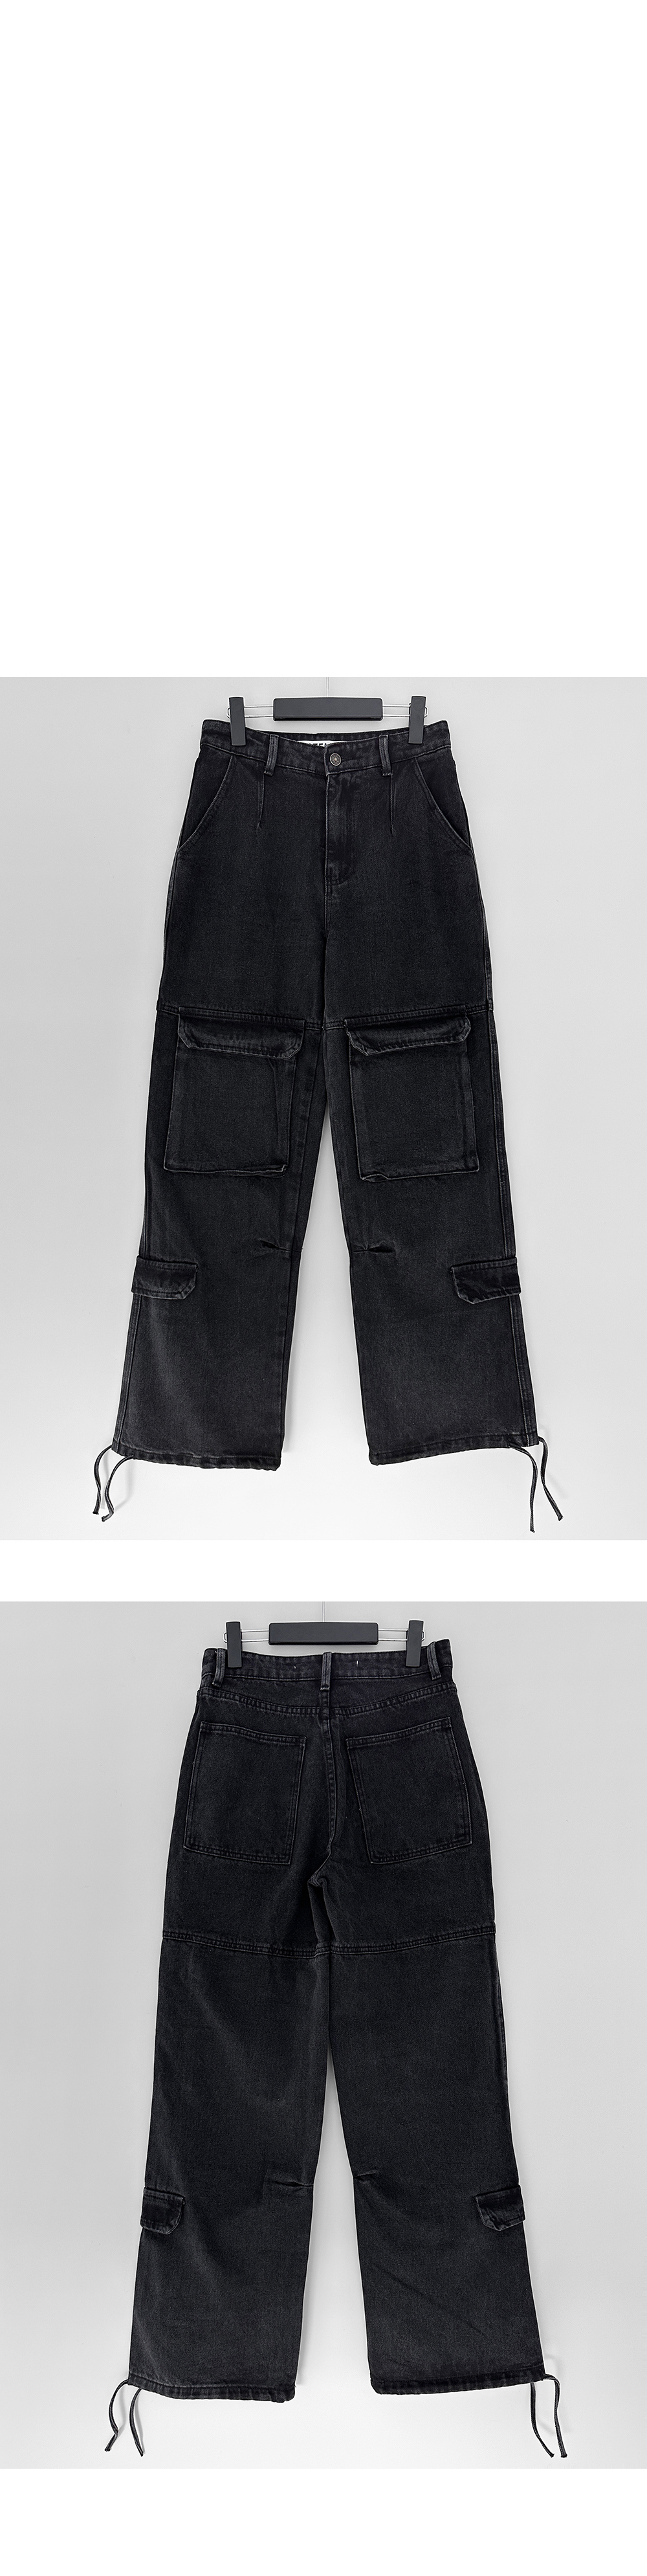 suspenders skirt/pants charcoal color image-S1L8